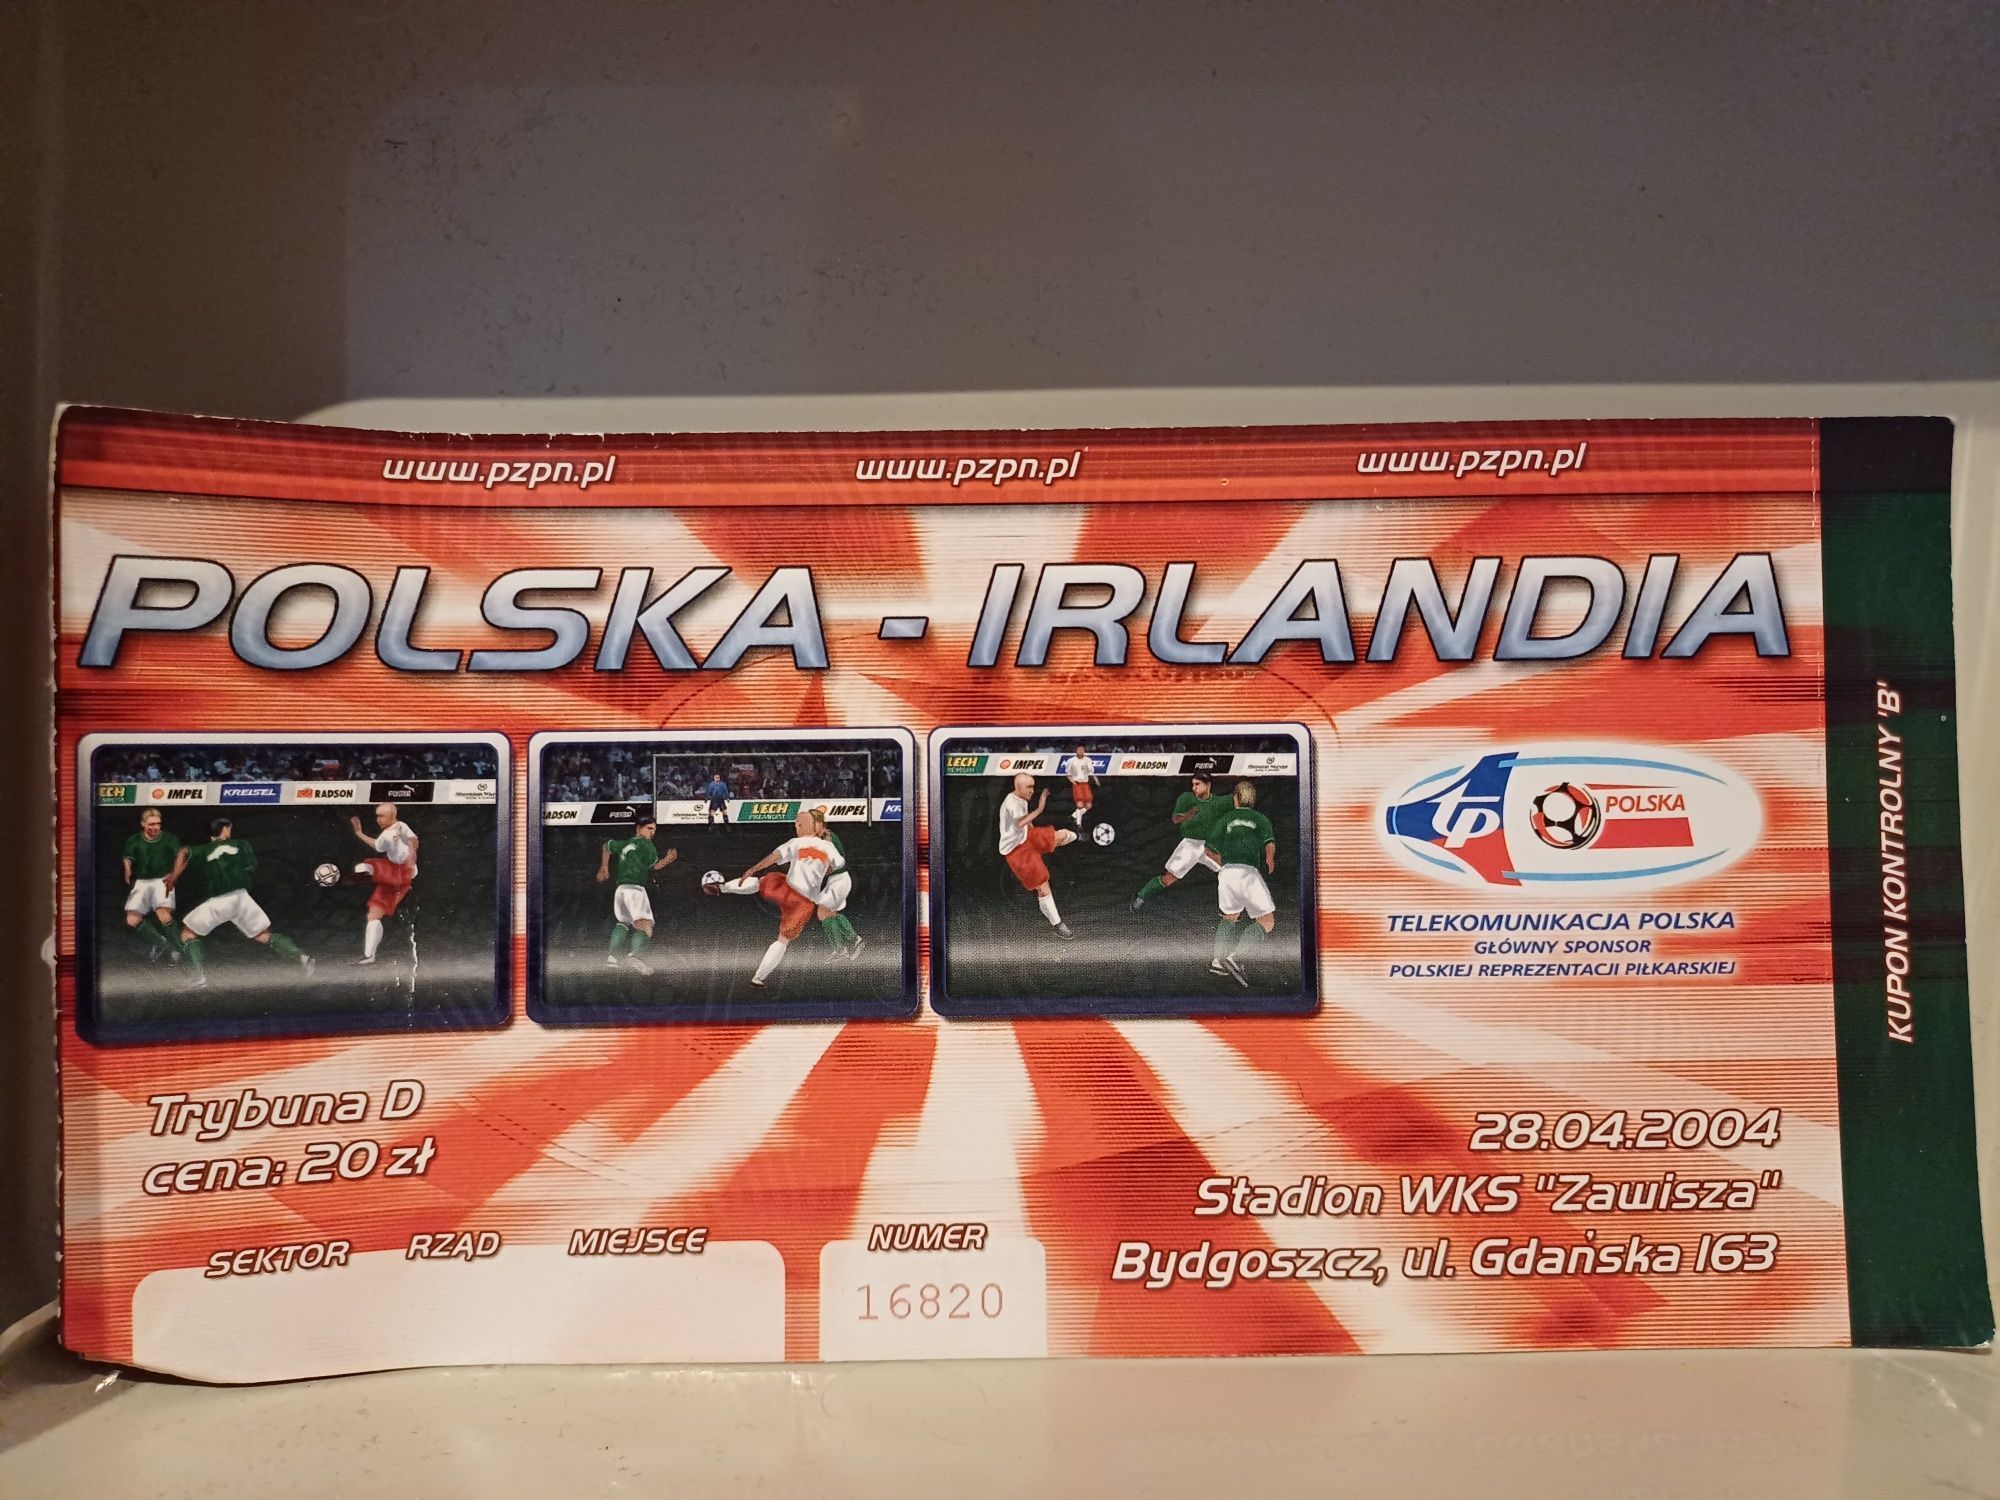 Bilet z 2004 r. Polska Irlandia piłka nożna